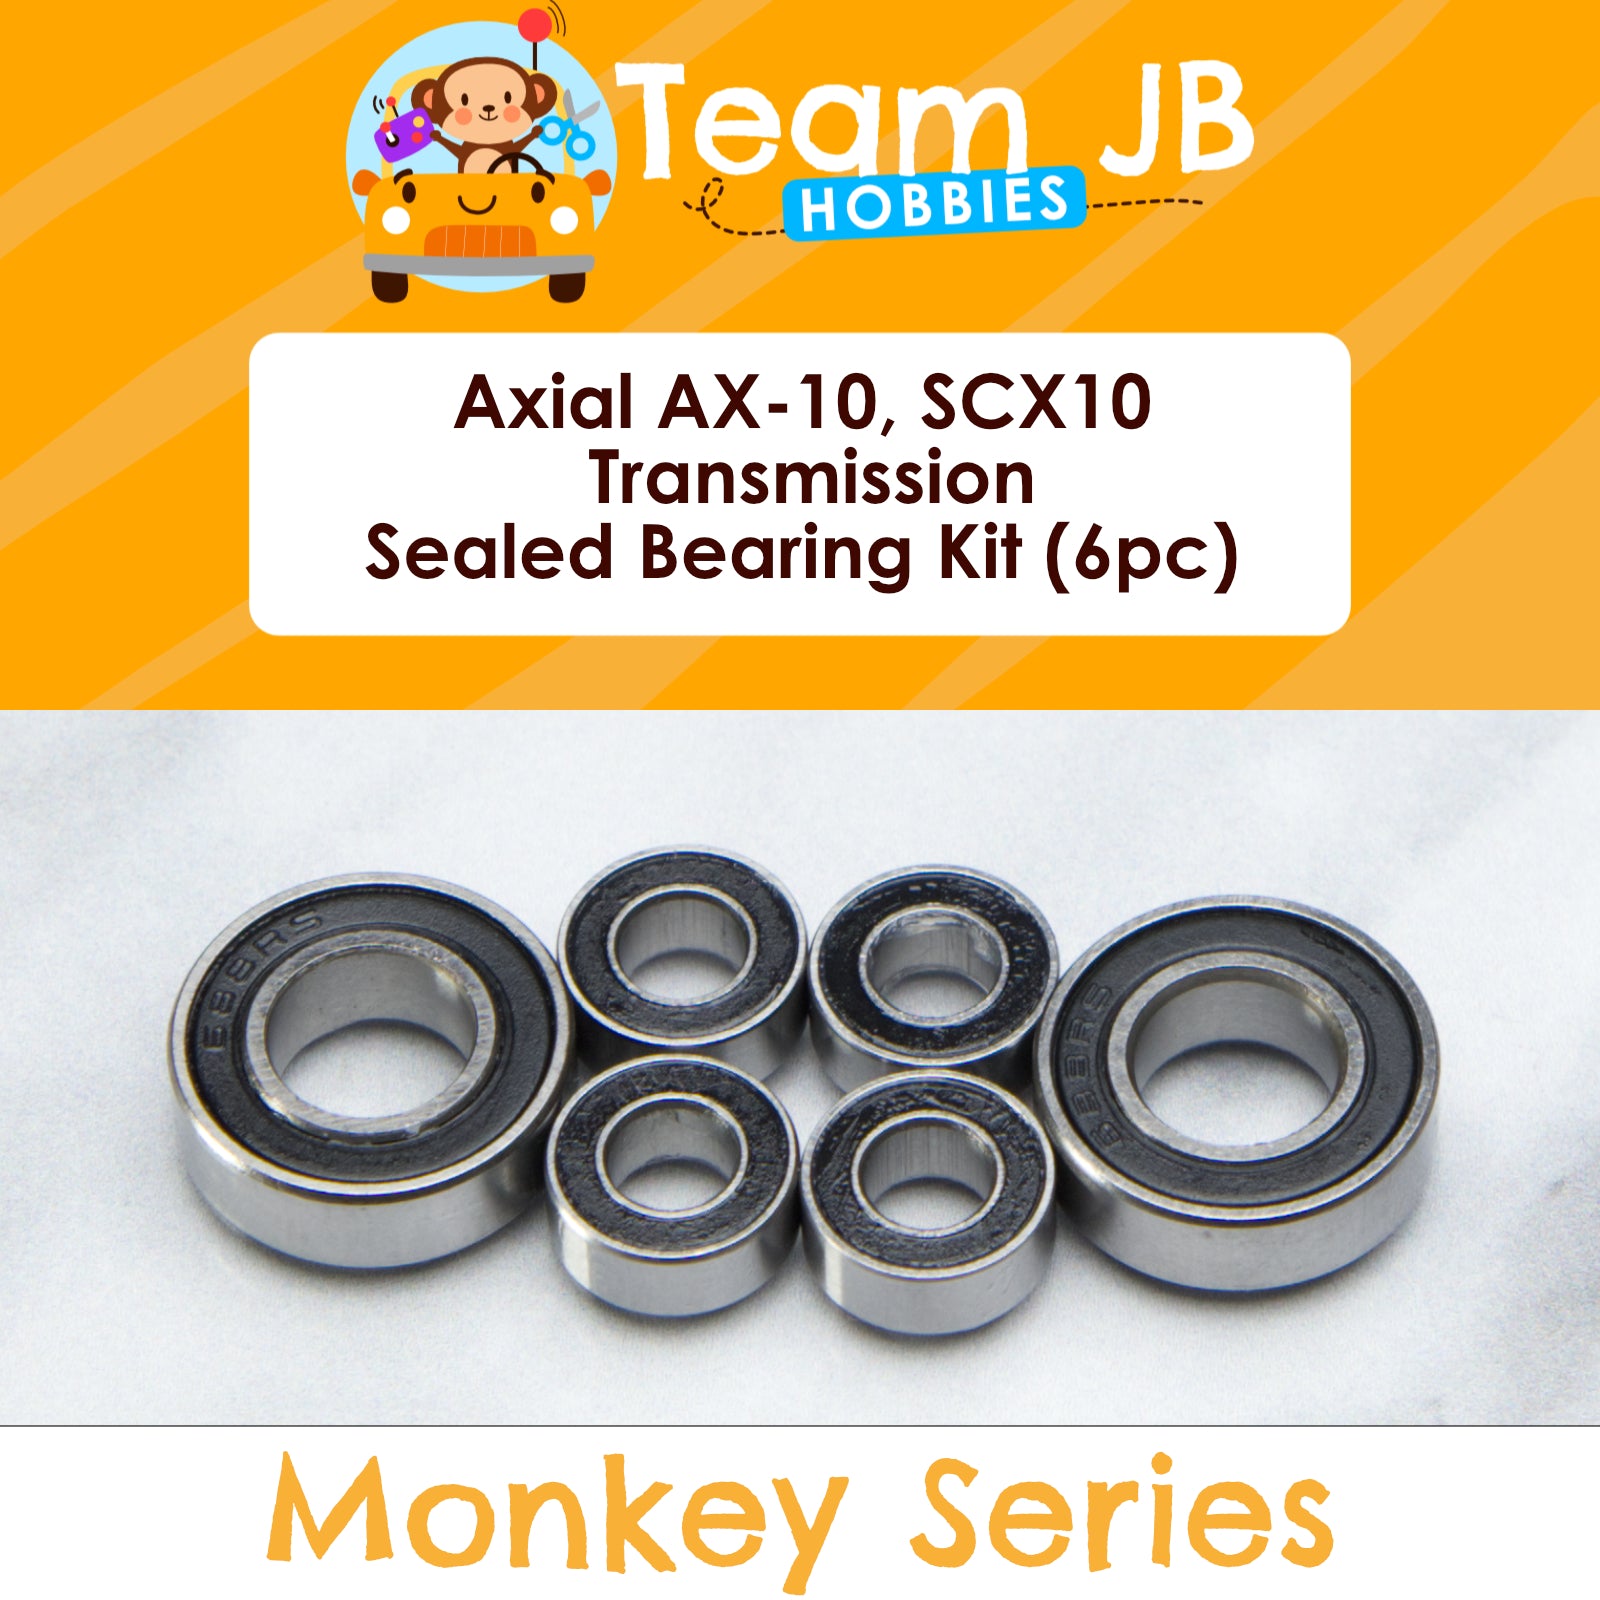 Axial AX-10, SCX10 Transmission - Sealed Bearing Kit